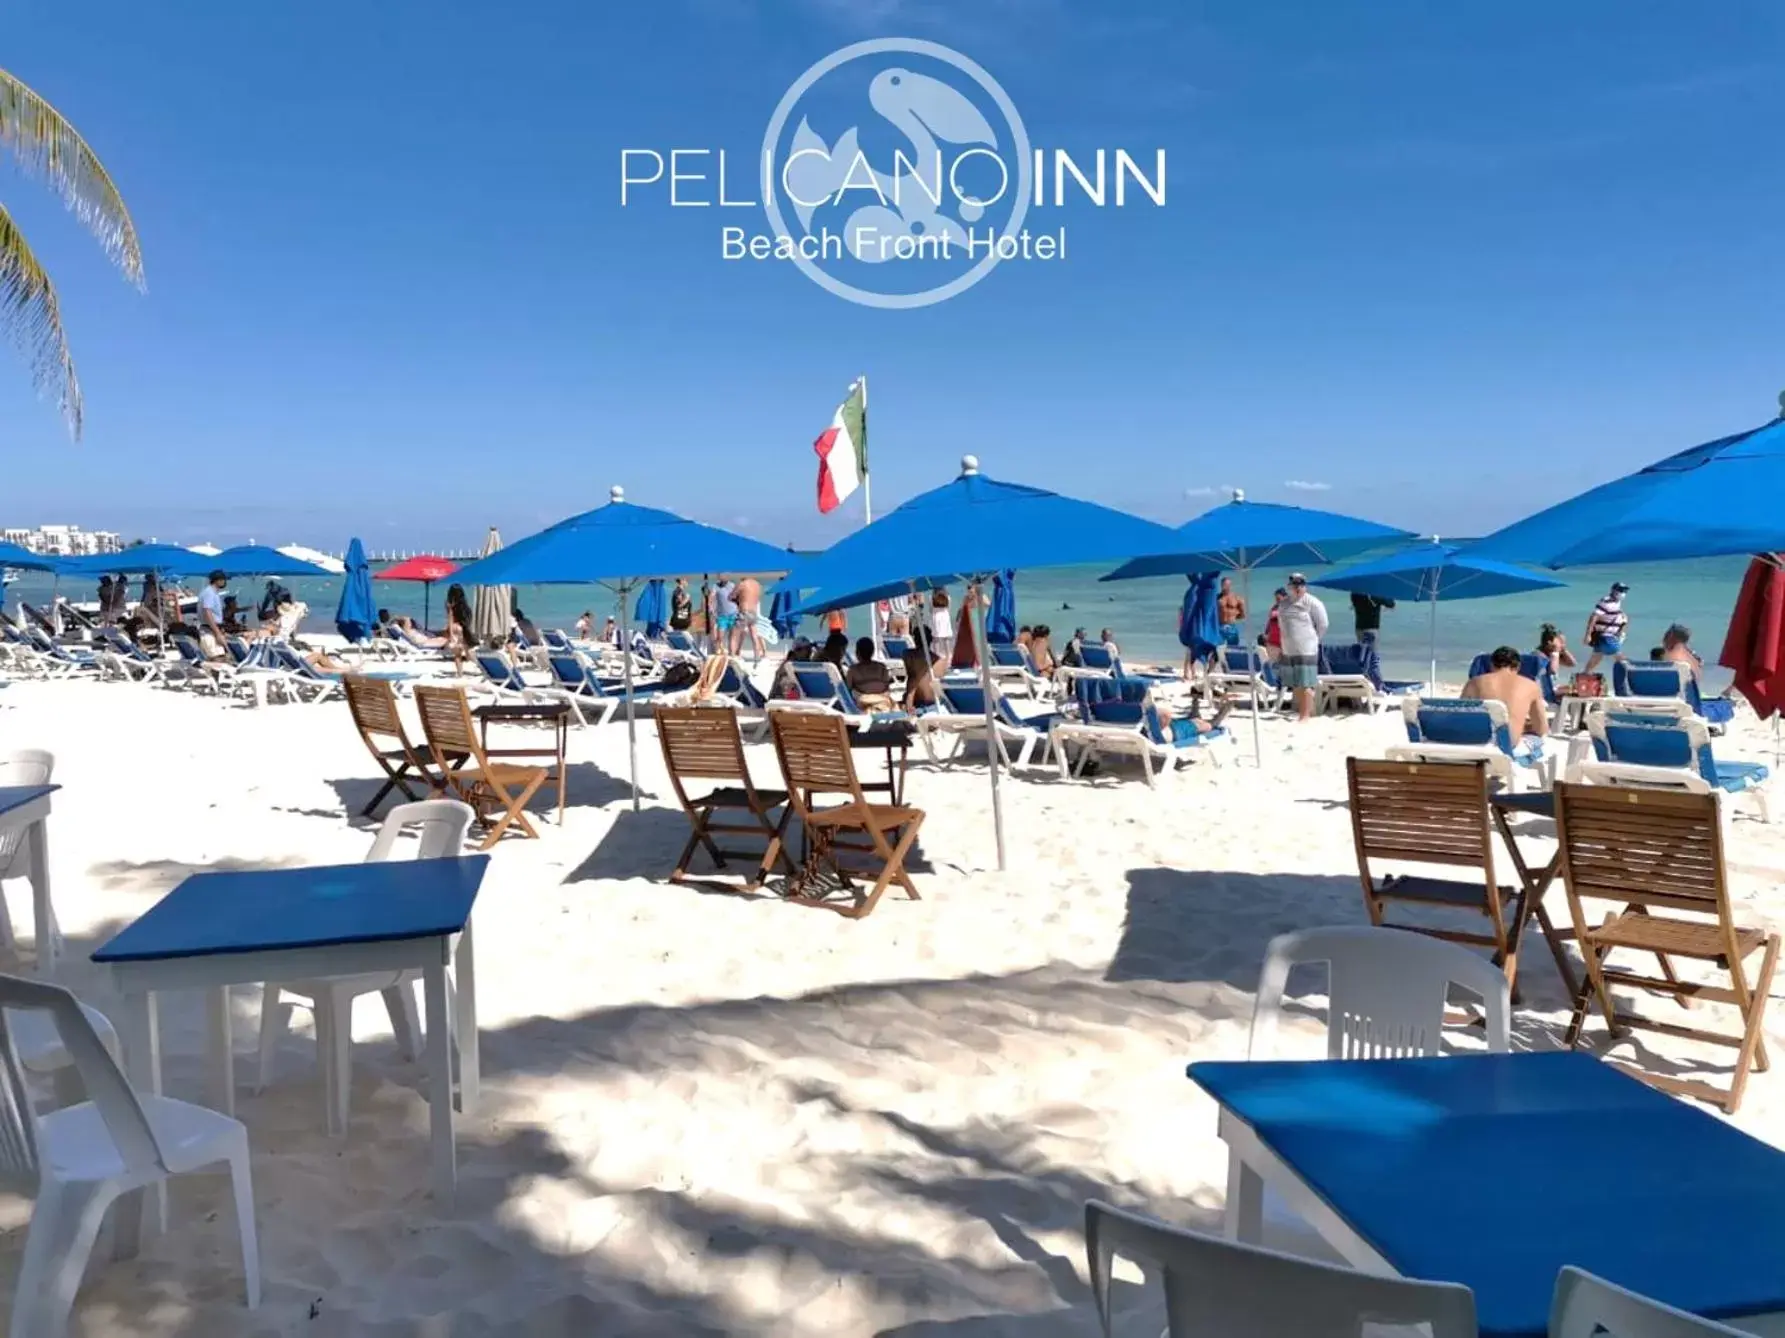 Restaurant/places to eat in Pelicano Inn Playa del Carmen - Beachfront Hotel